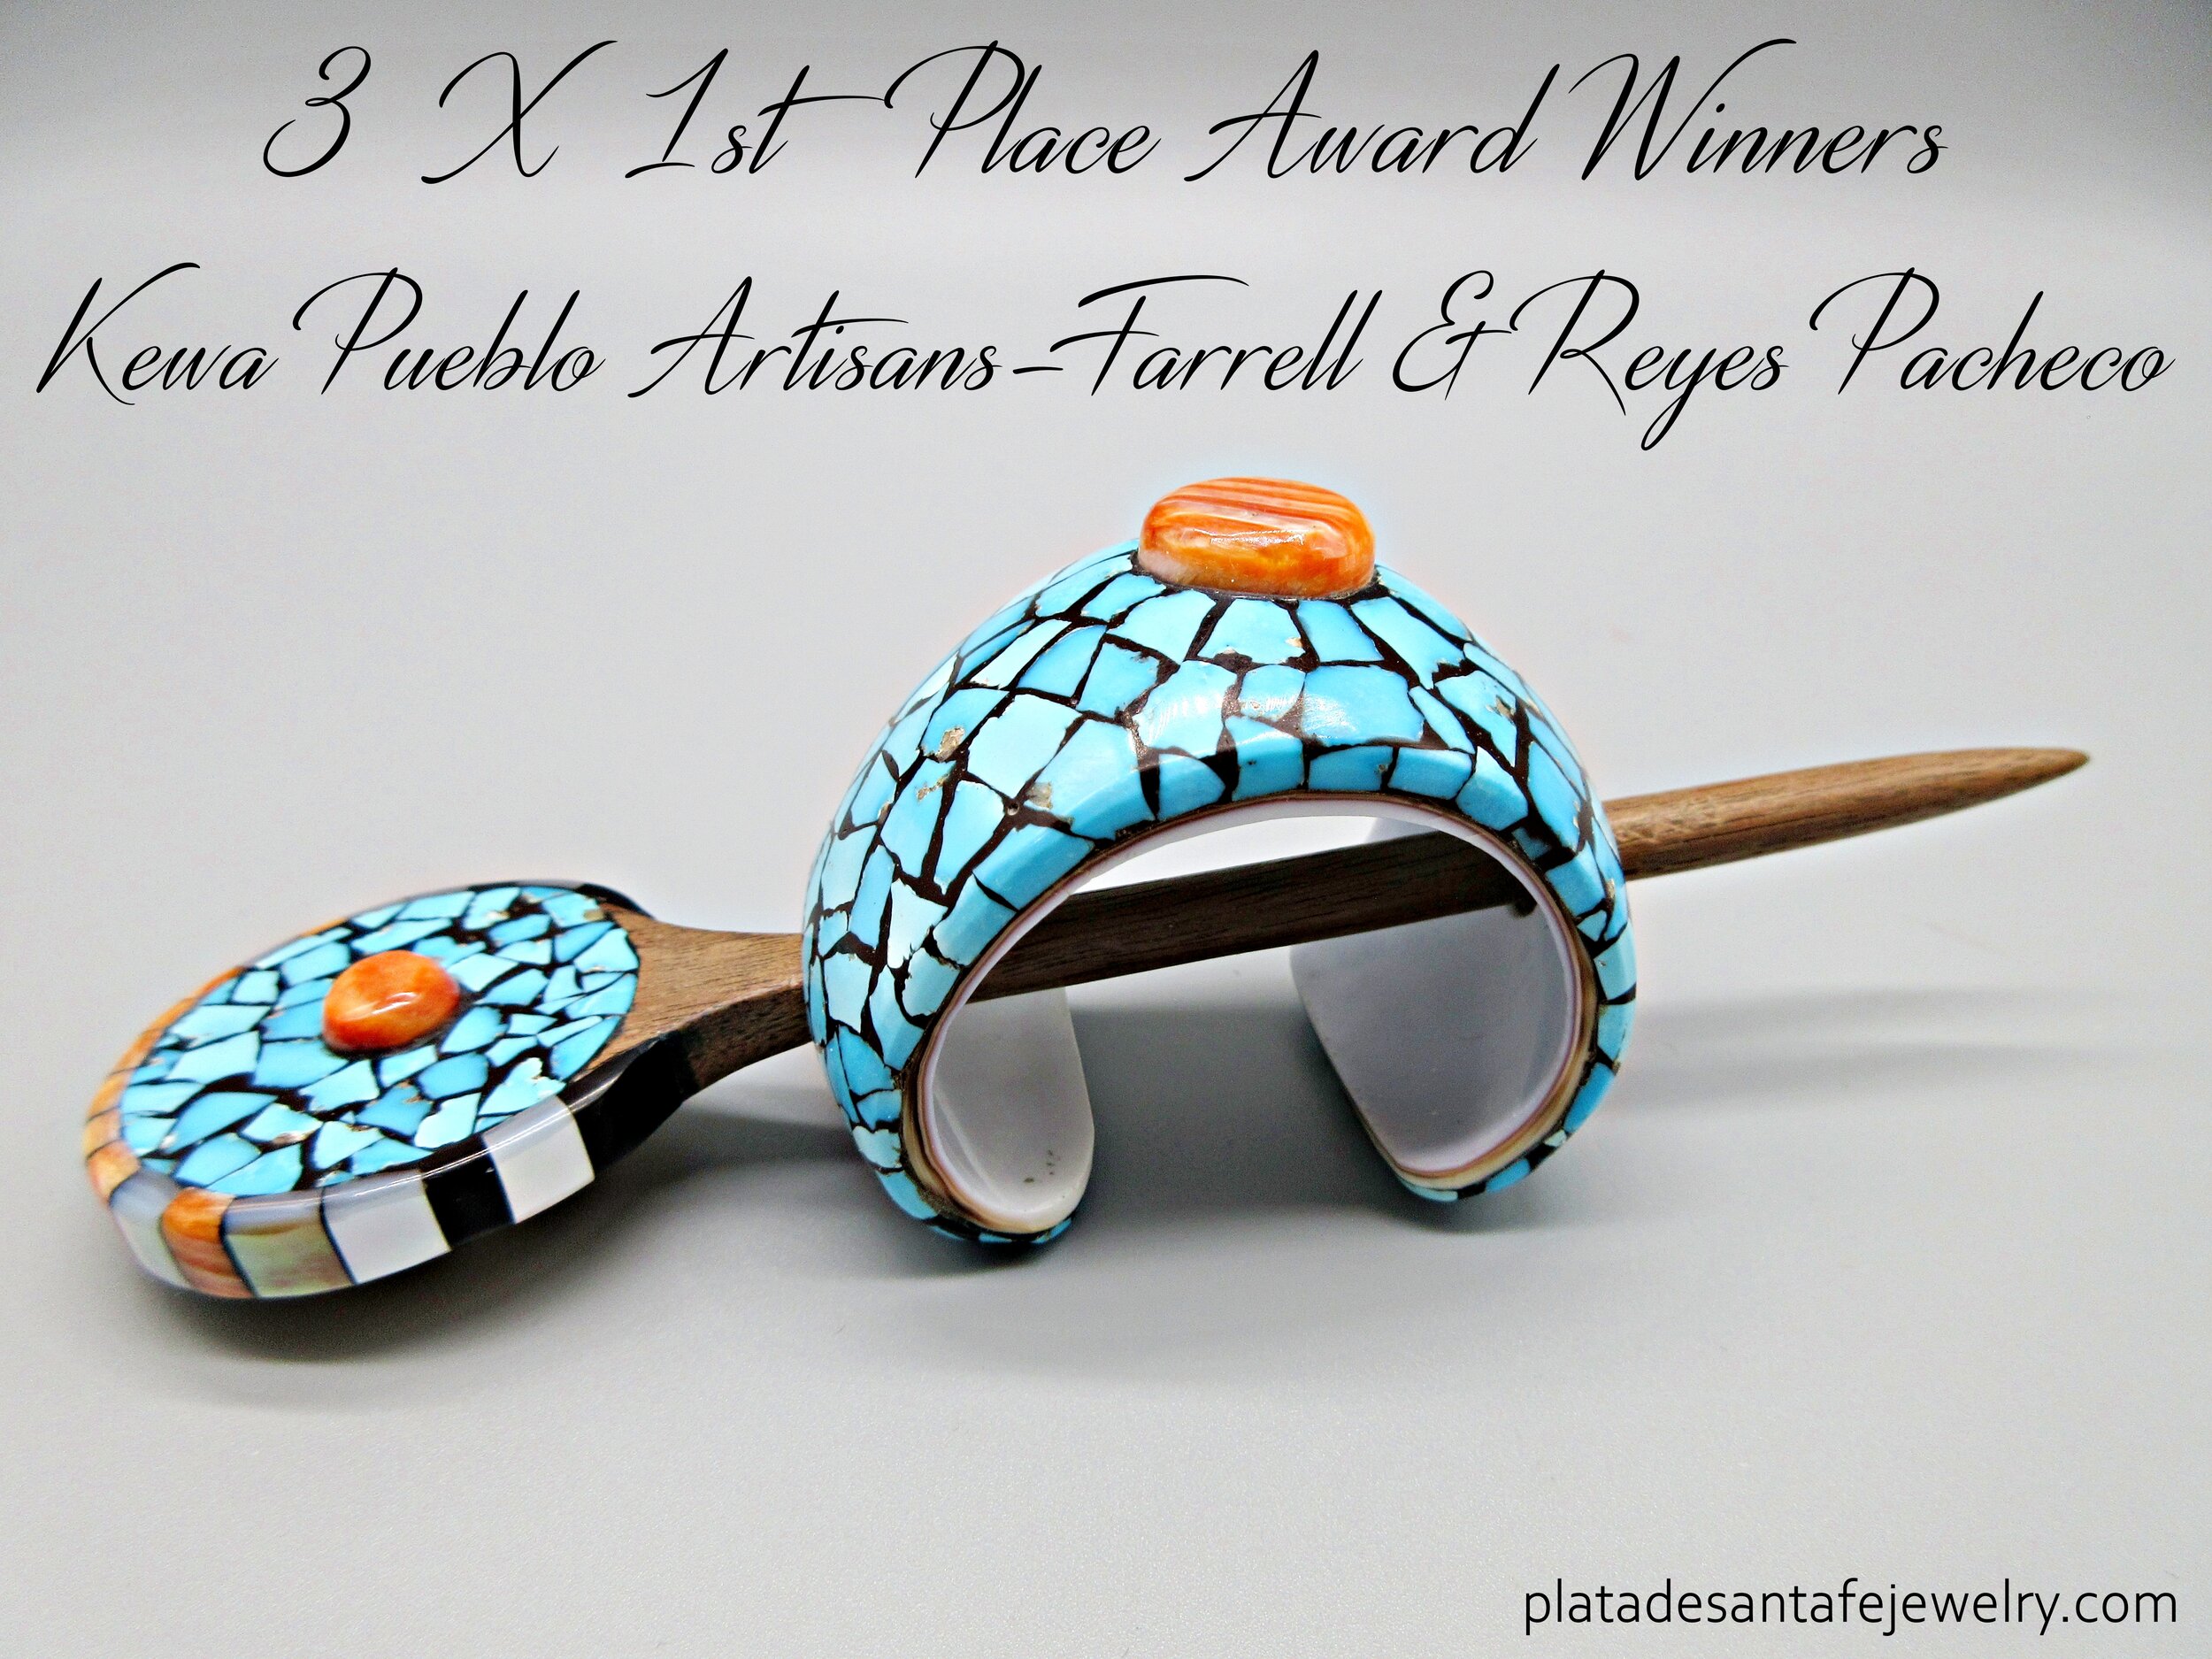 Bun Accessoires Haaraccessoires Haarsieraden Kewa Pueblo Award Winners-FARRELL/REYES PACHECO-Sonoran Turquoise Mosaic Inlay Tops-Hand Cut/Sculpted Oak Wood Hair Stick-2 Choices! 